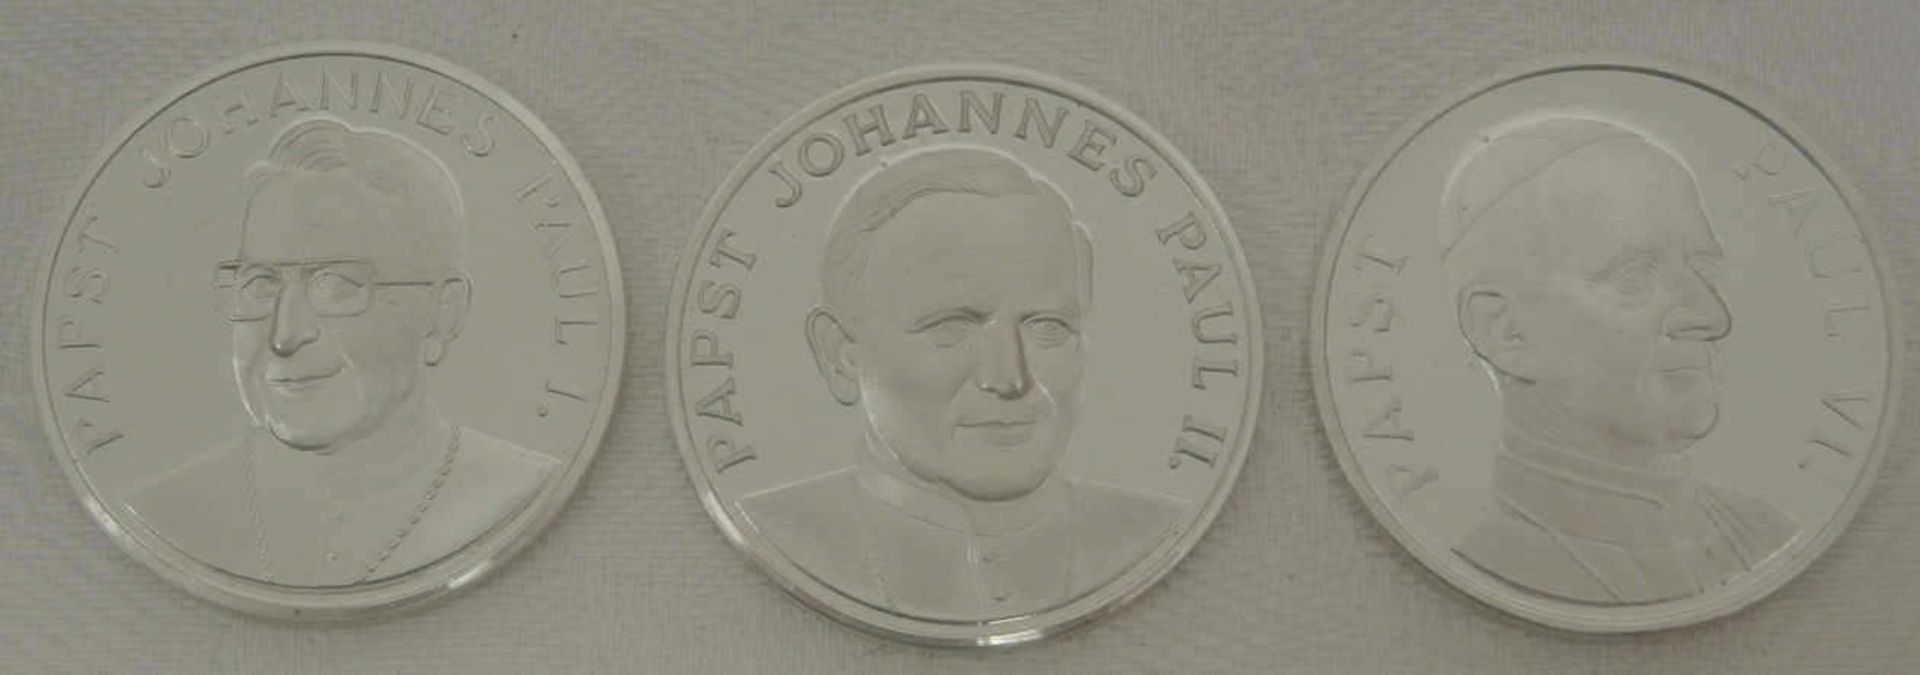 3 kleine Silbermedaillen Vatikan, Paul I, Paul II, Paul VI. Alle Silber gepunzt - Image 2 of 2